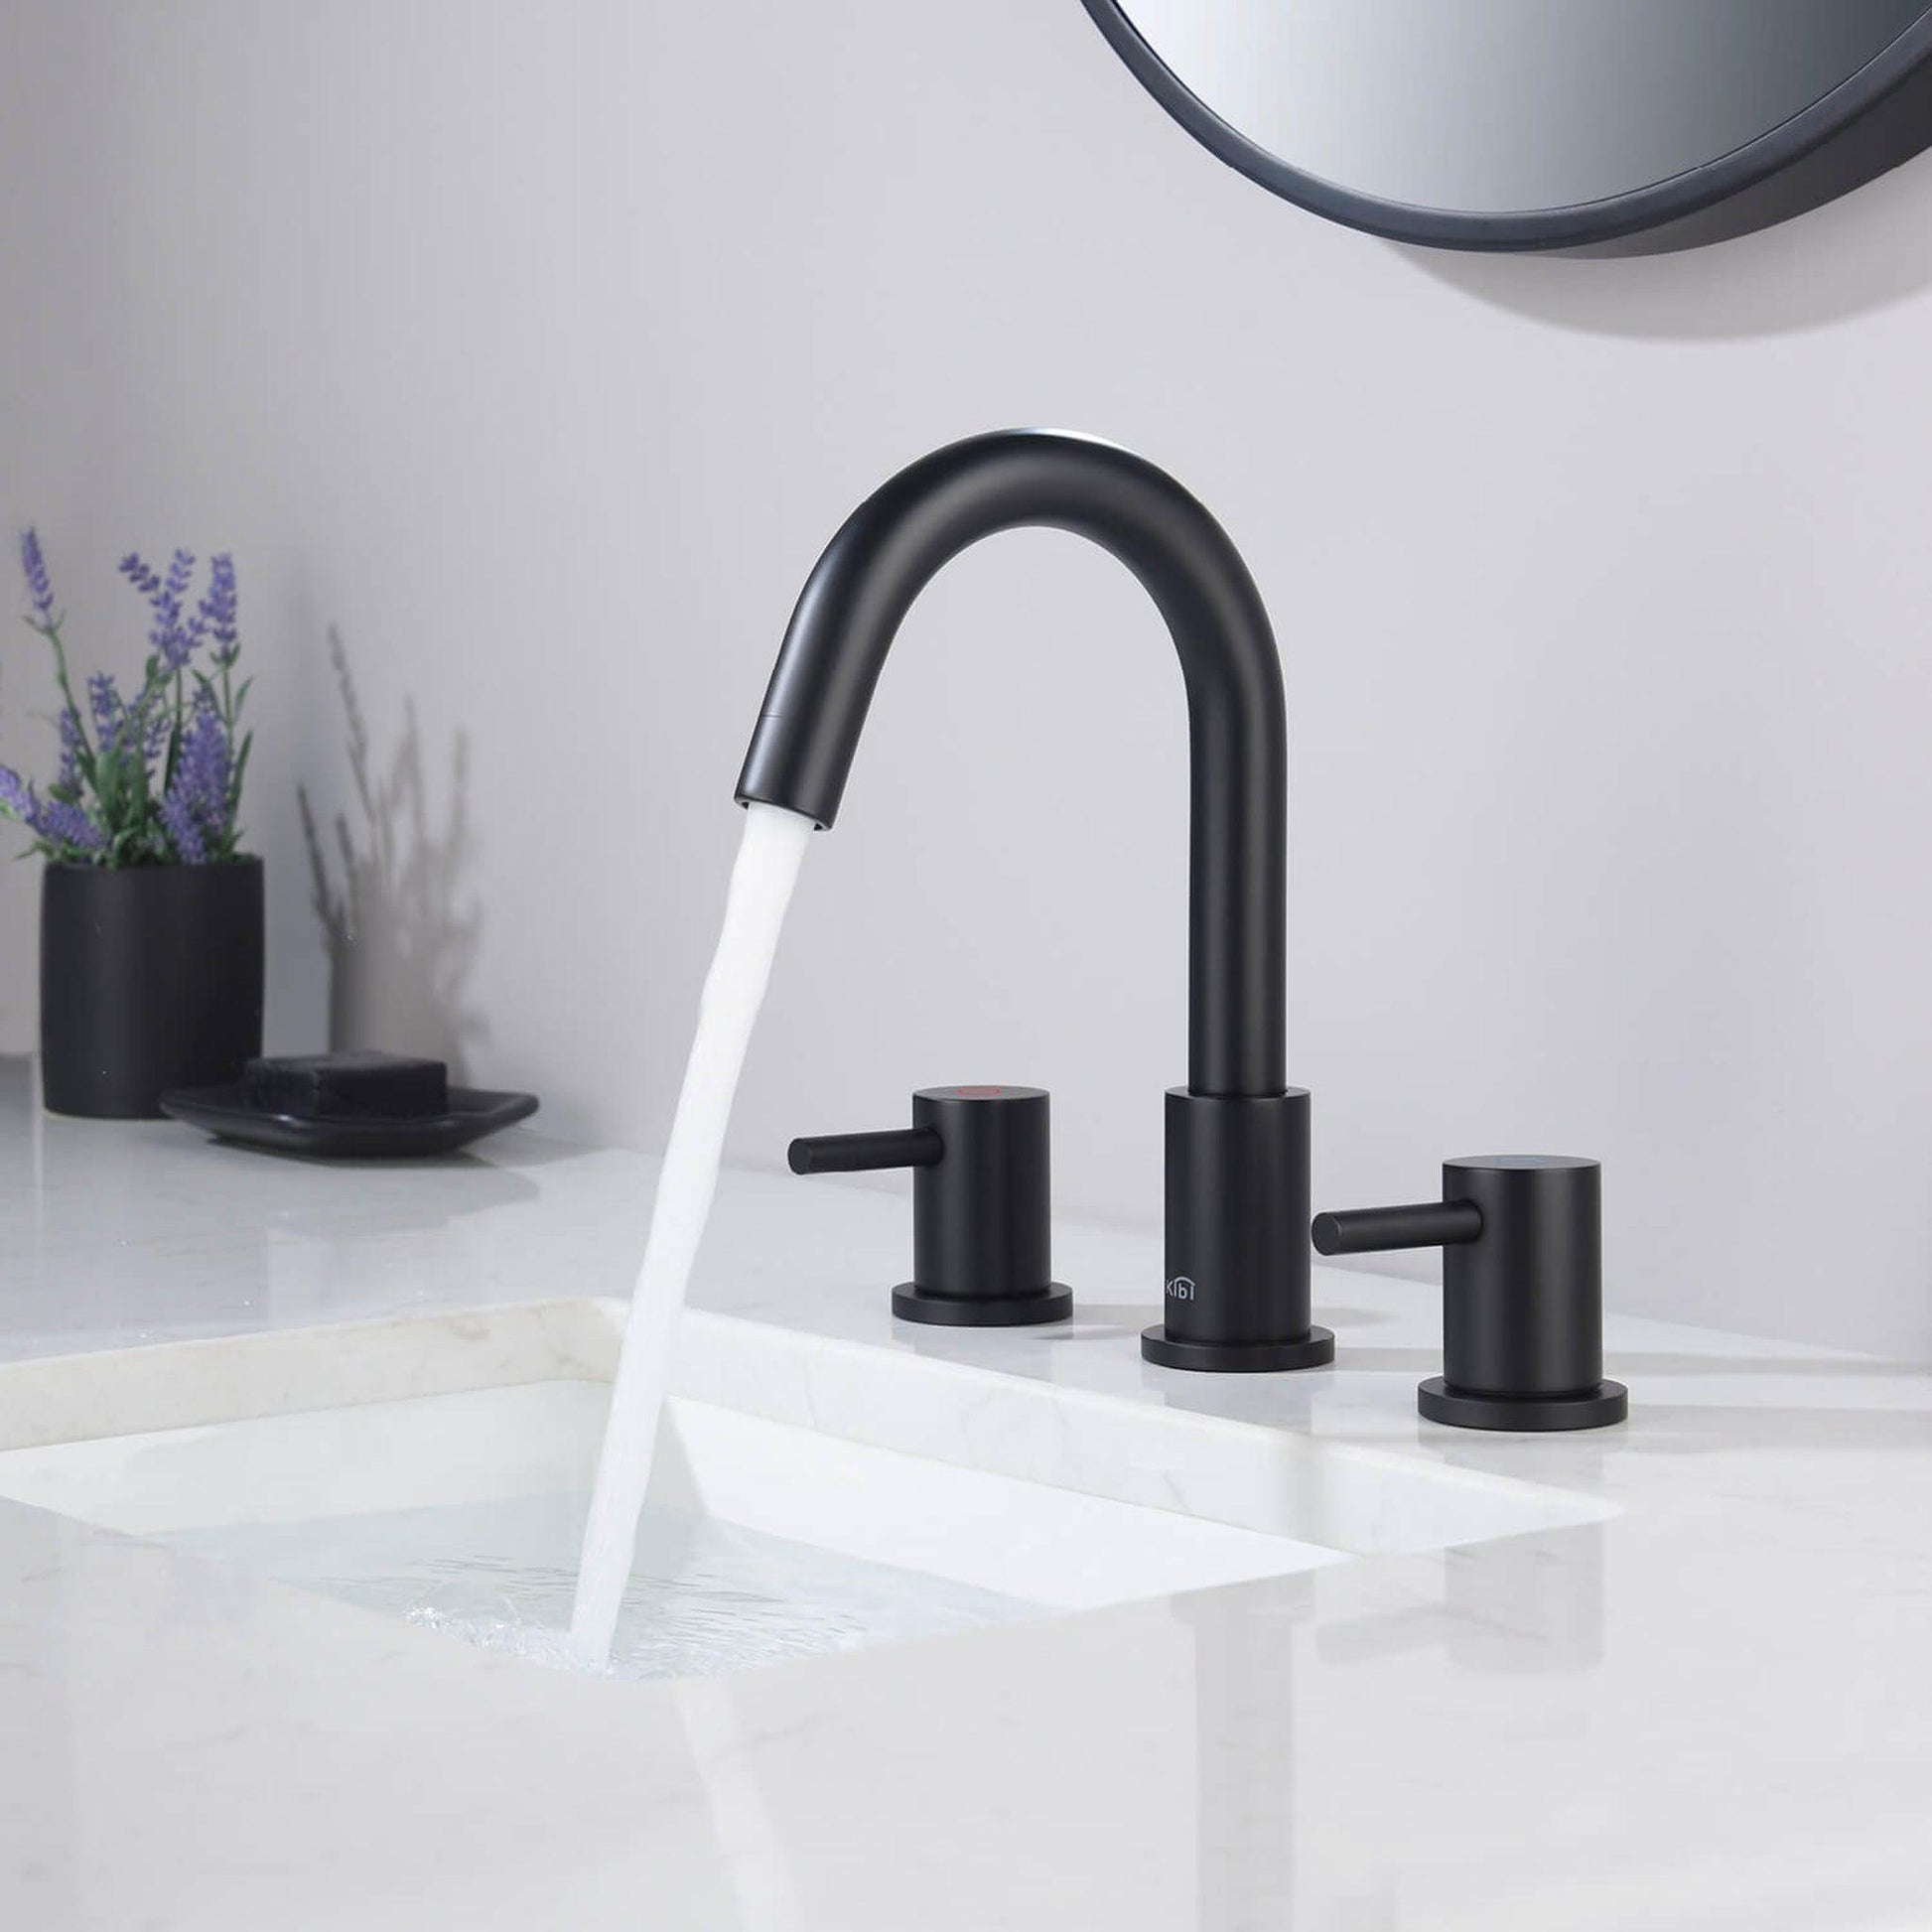 KIBI Circular 8" Widespread 2-Handle Matte Black Solid Brass Bathroom Sink Faucet With Pop-Up Drain